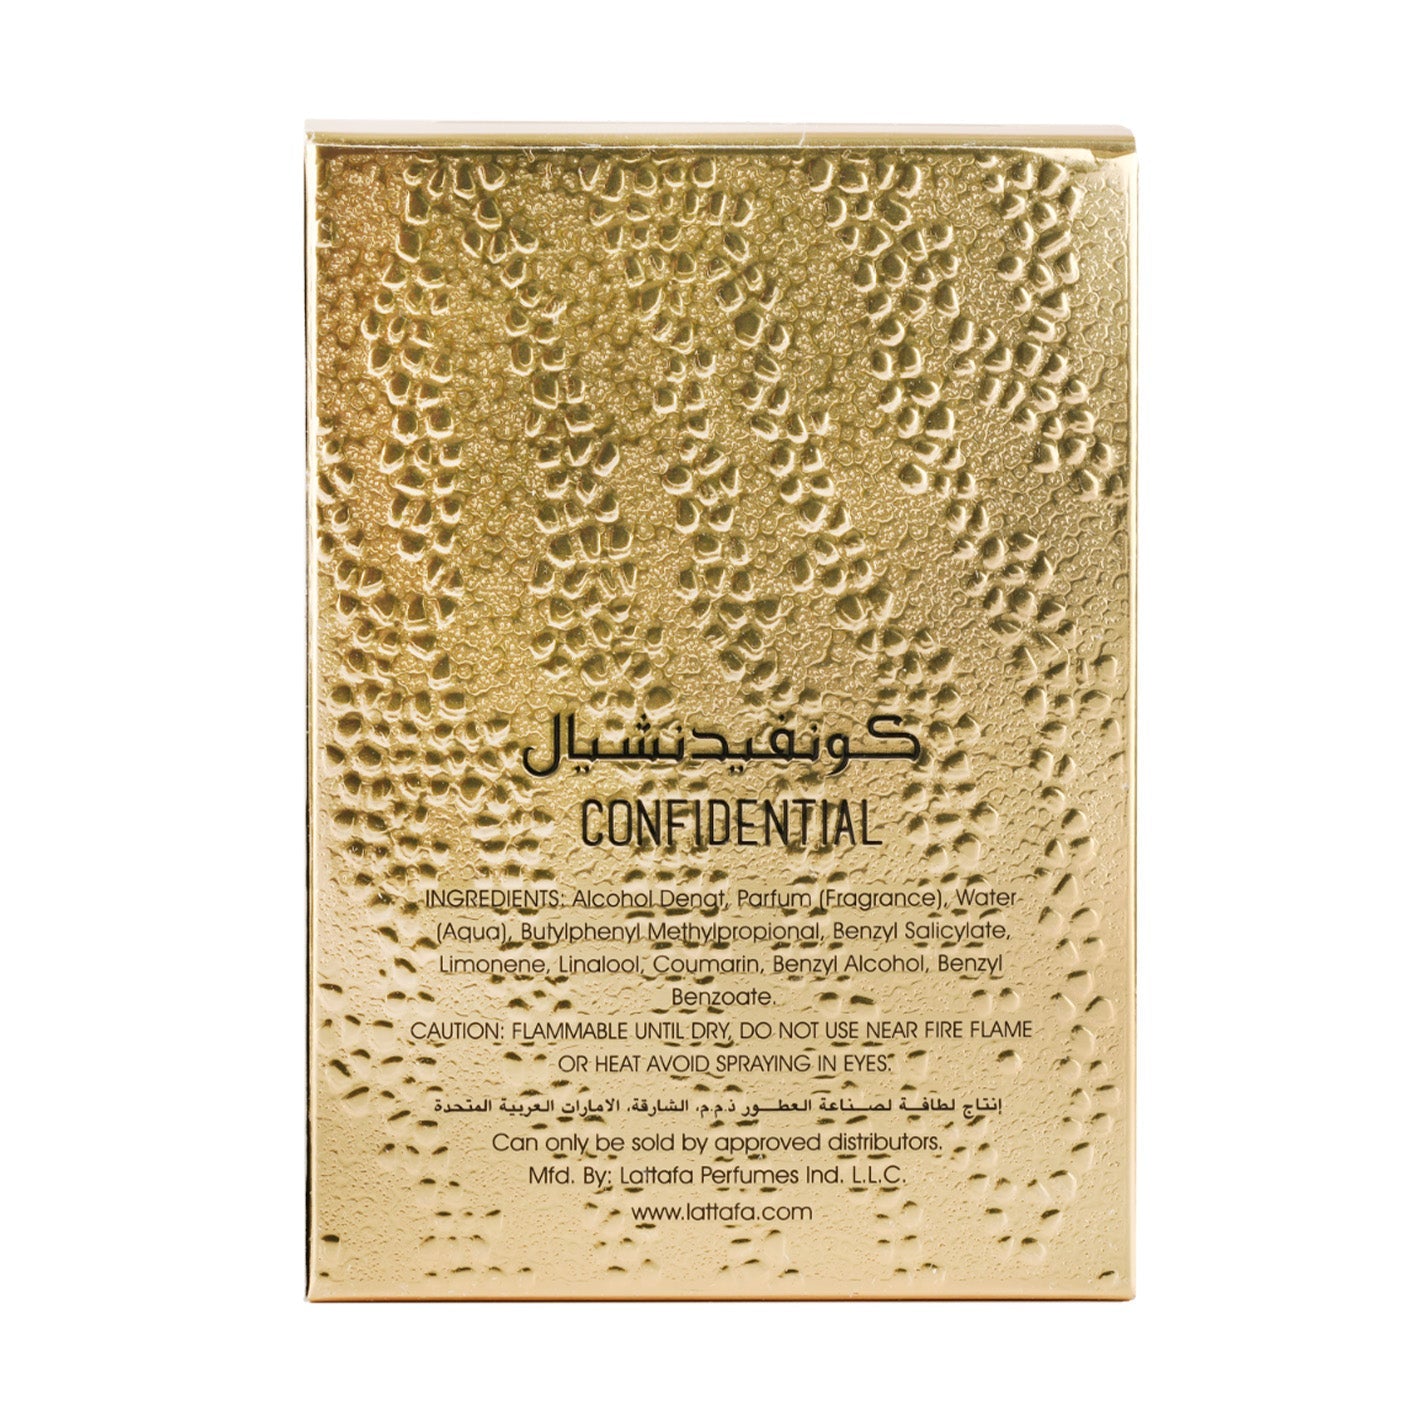 Confidential Private Gold Eau de Parfum 100ml Lattafa-almanaar Islamic Store